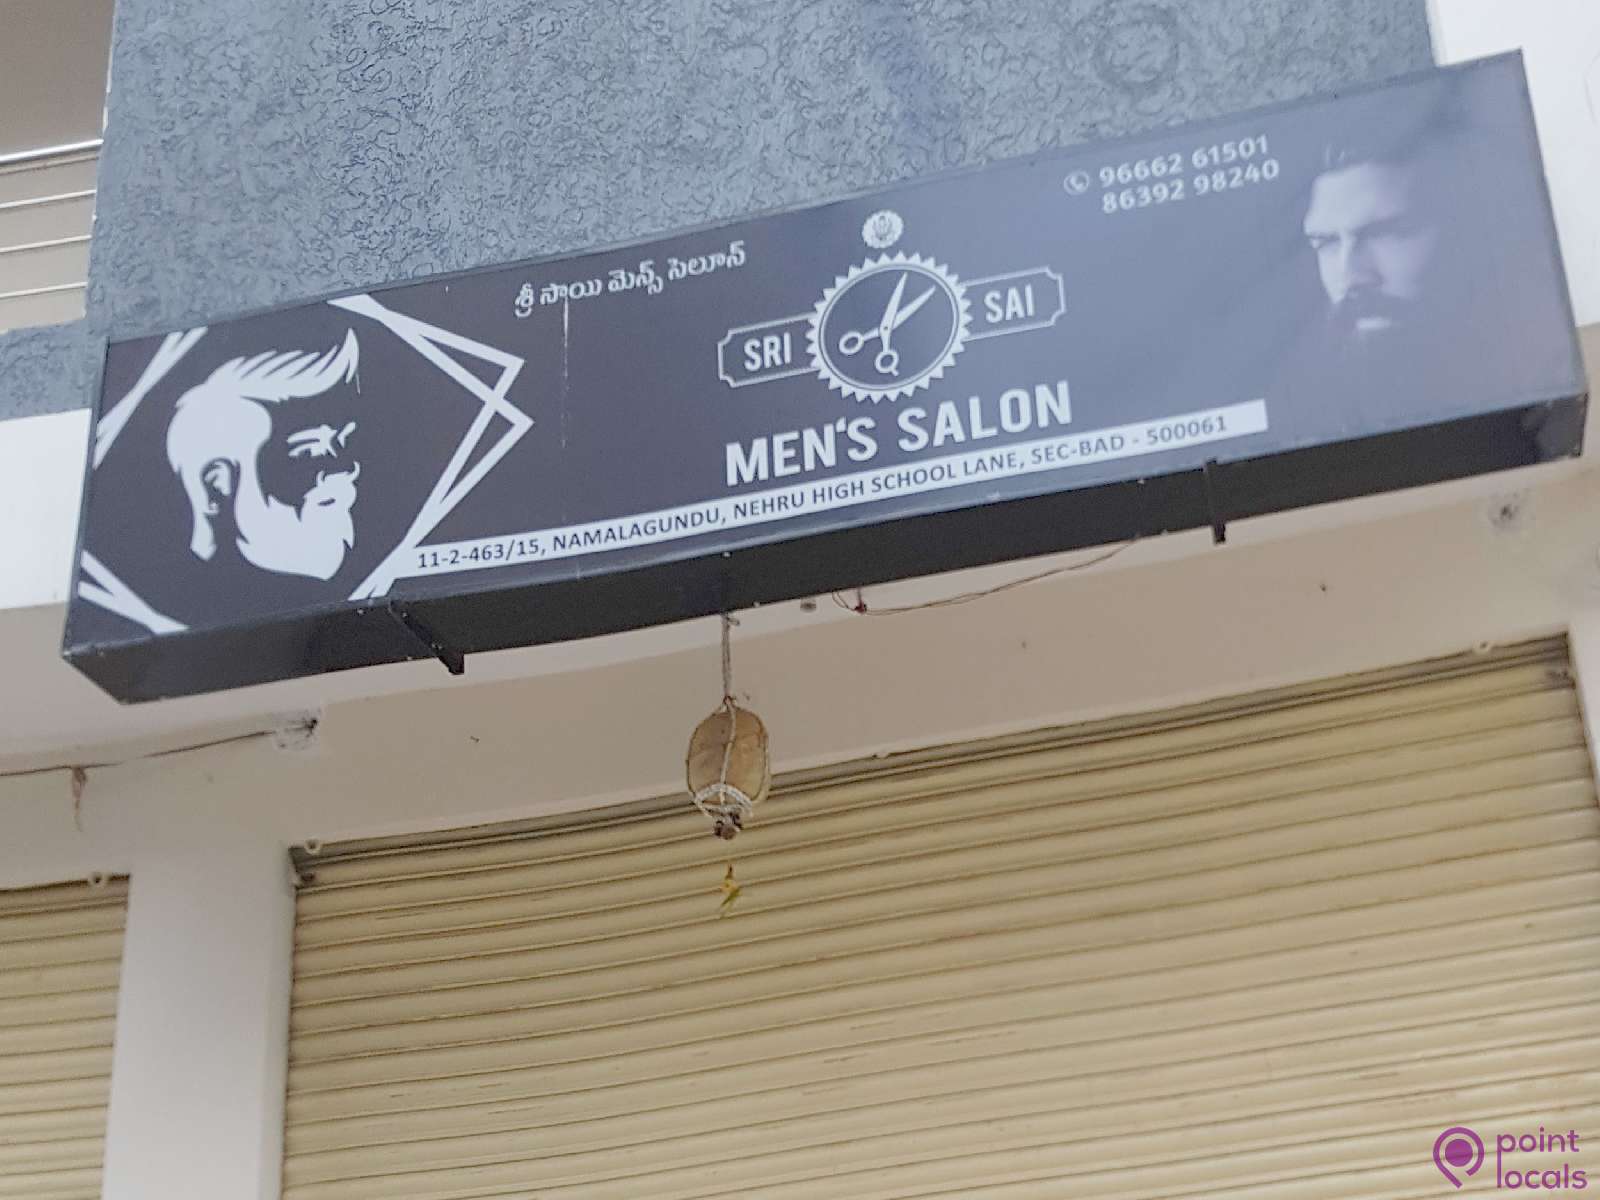 Sri Sai Men's Salon - Hair Salon in Secunderabad,Telangana | Pointlocals